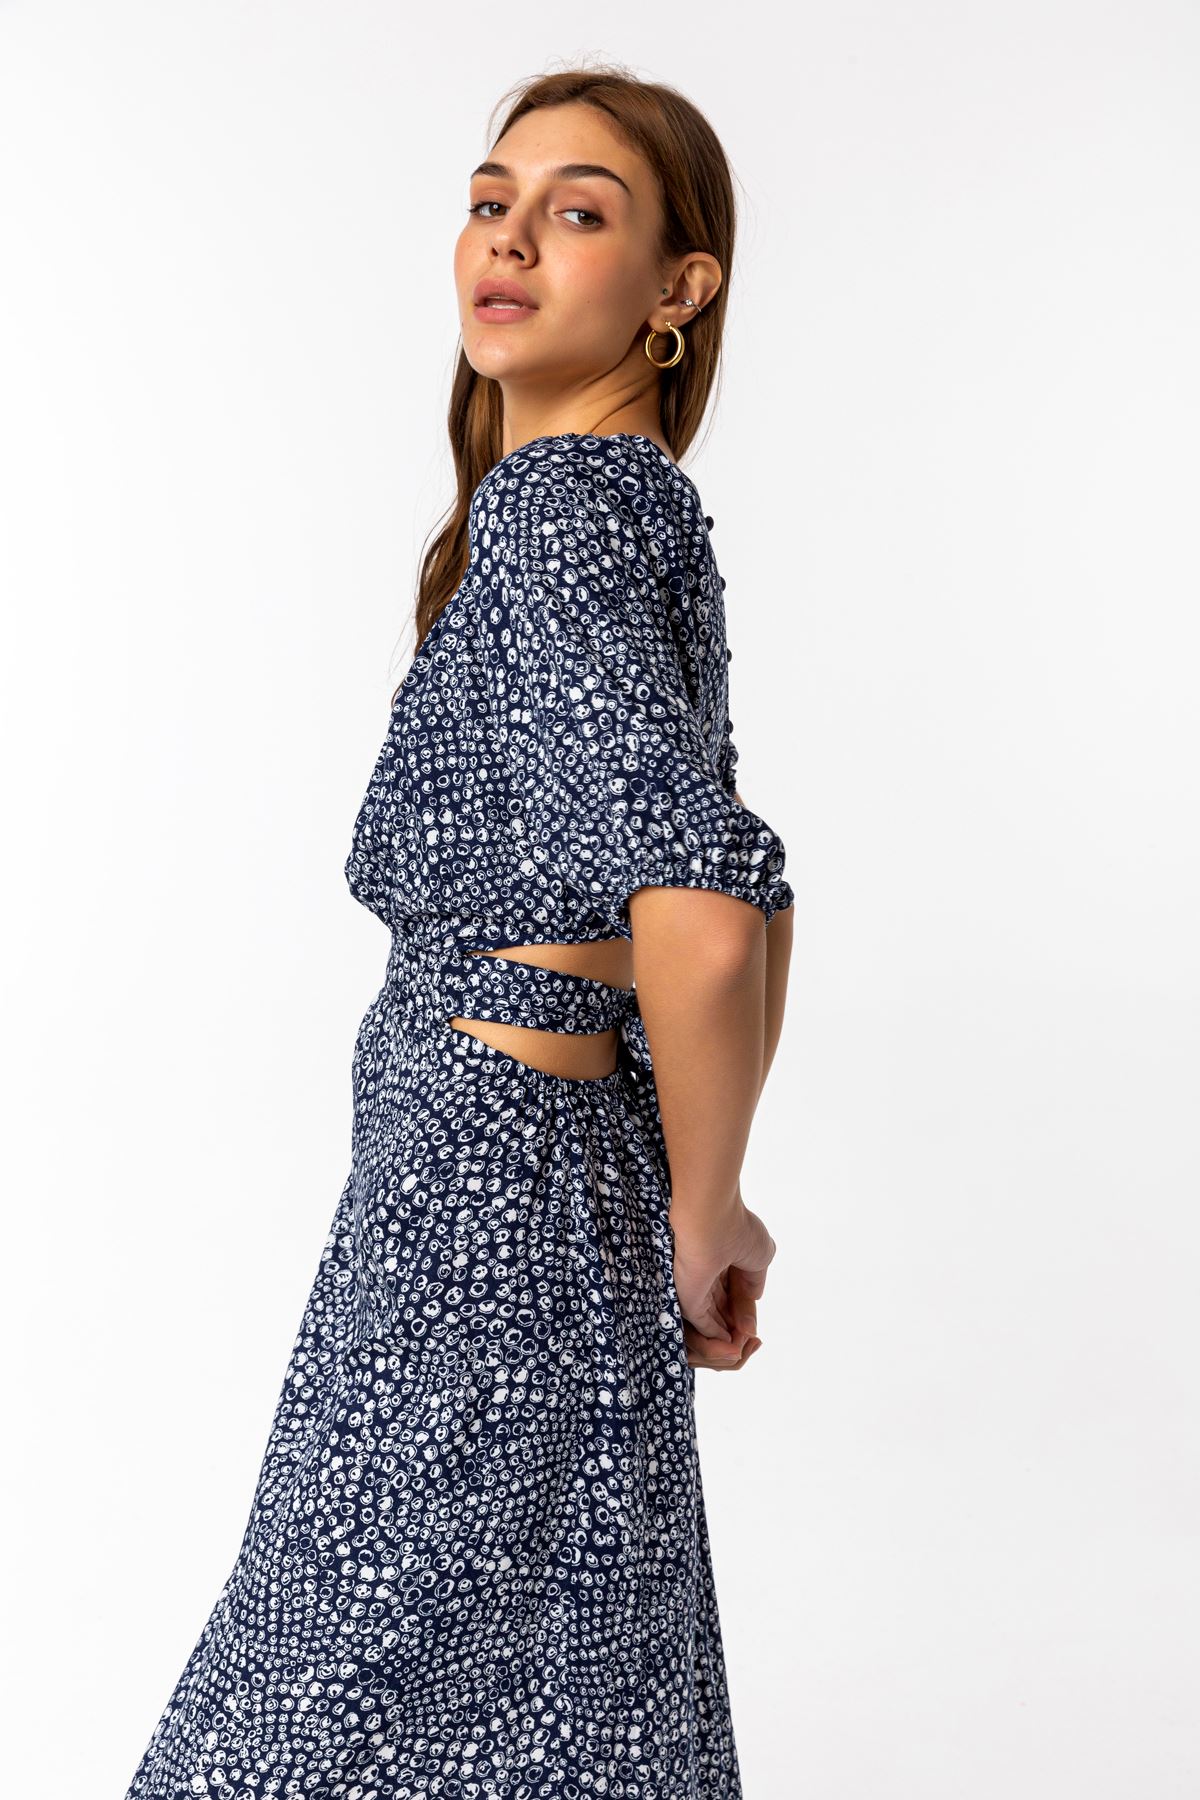 Viscon Fabric Short Sleeve Plush Collar Midi Women Dress - Navy Blue 